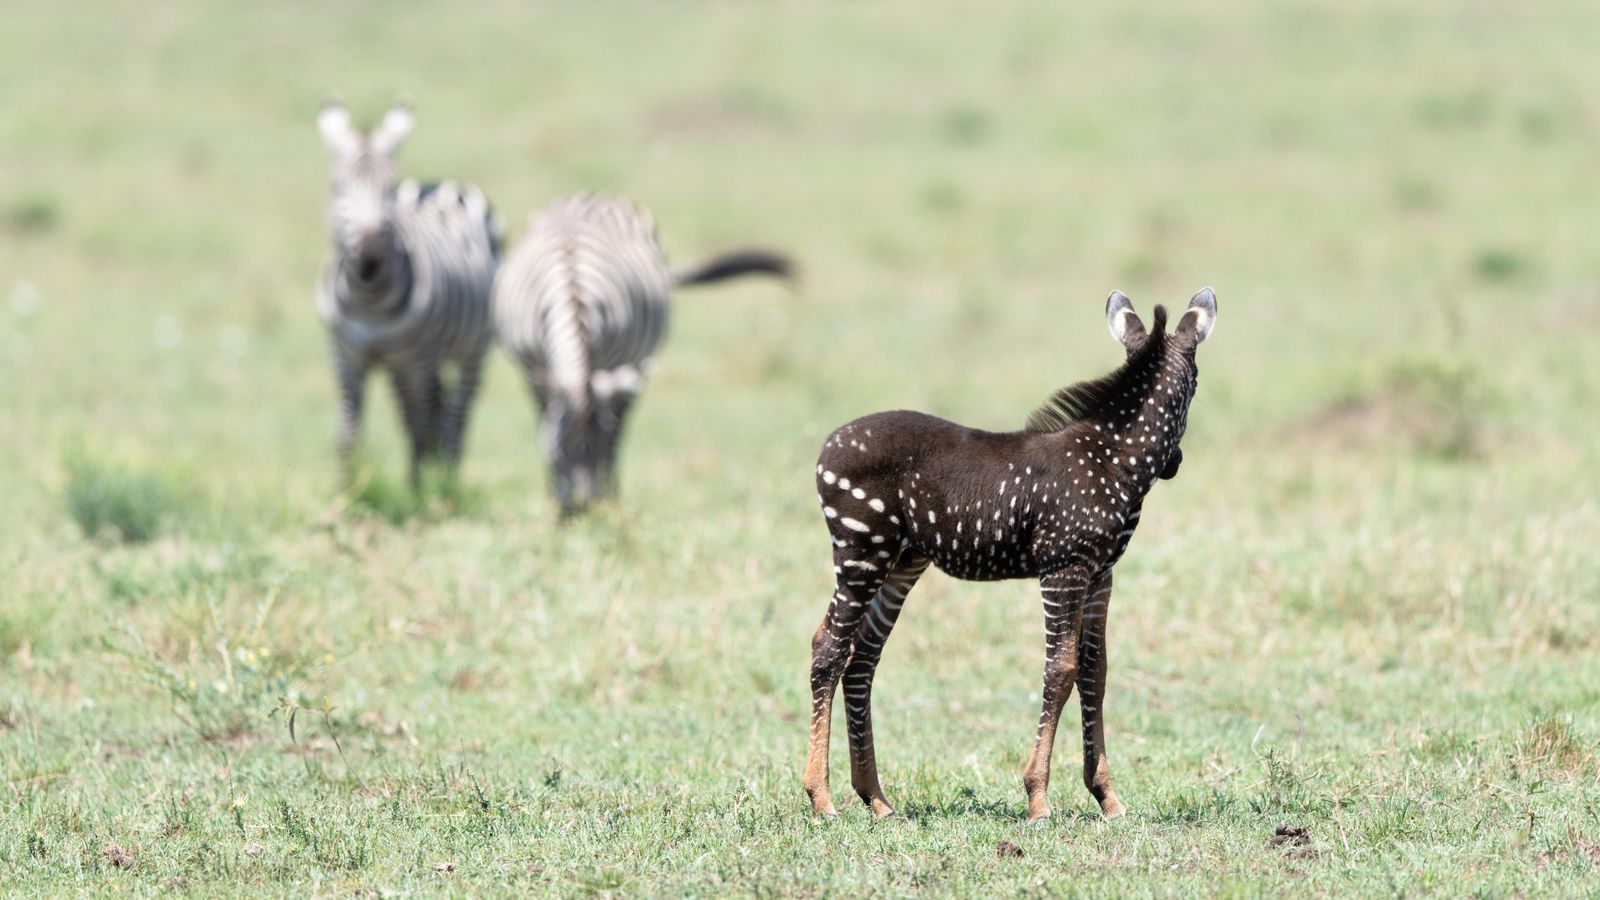 Spotted in Kenya: A Baby Zebra With Polka Dots | Smart News| Smithsonian  Magazine